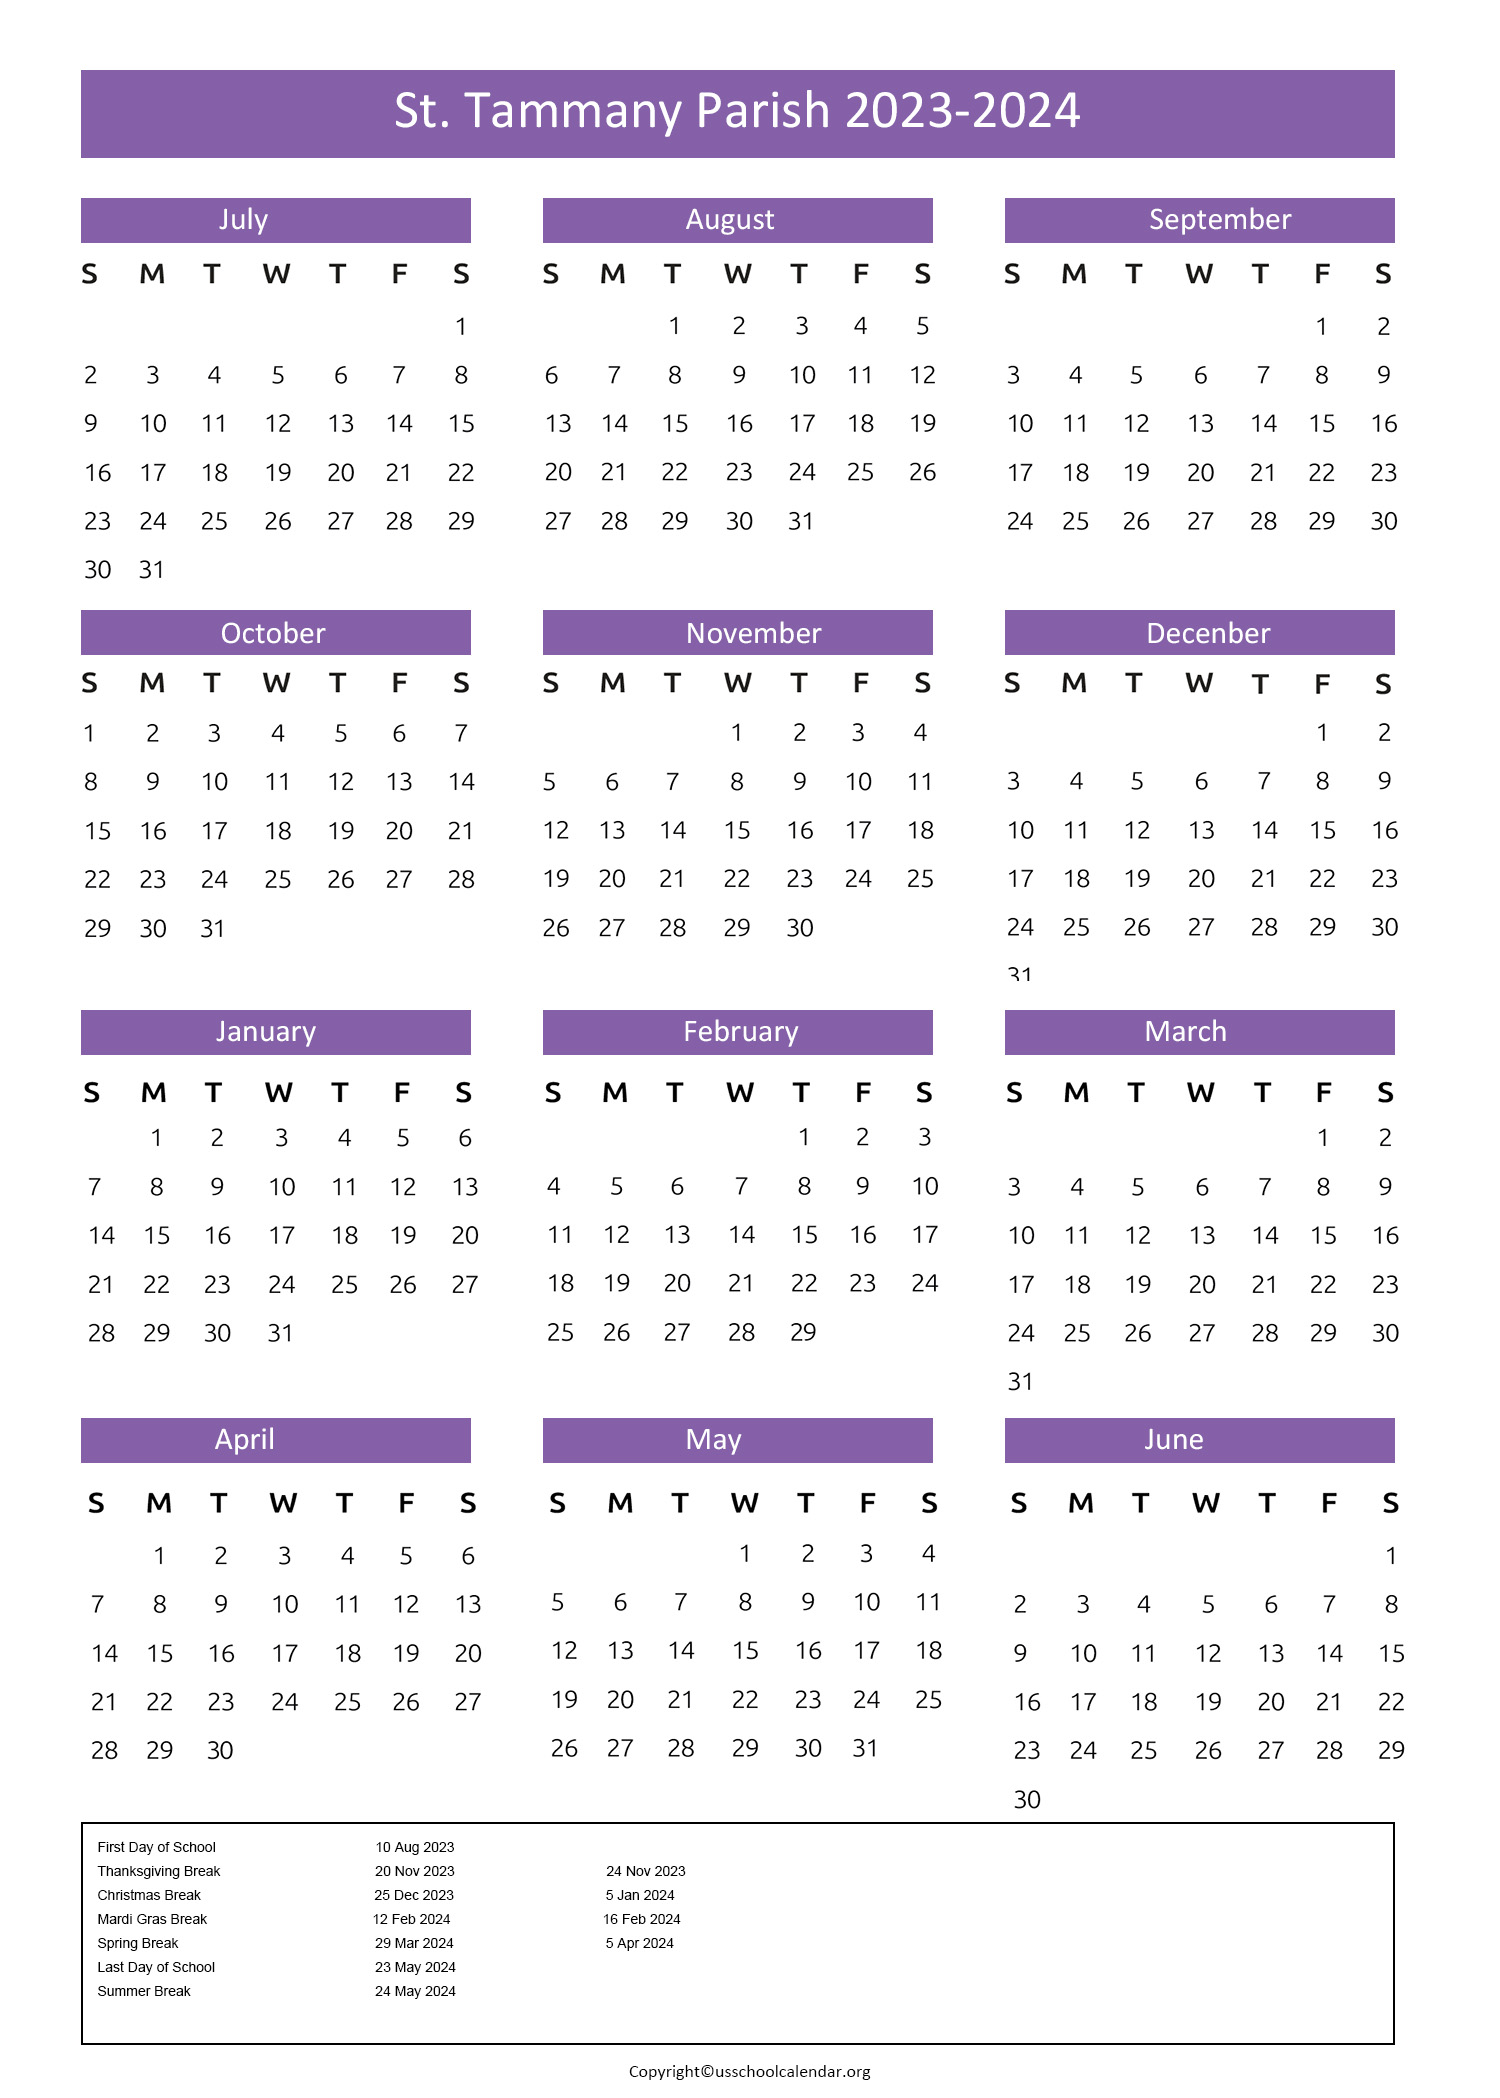 St Tammany Parish Schools Calendar with Holidays 20232024